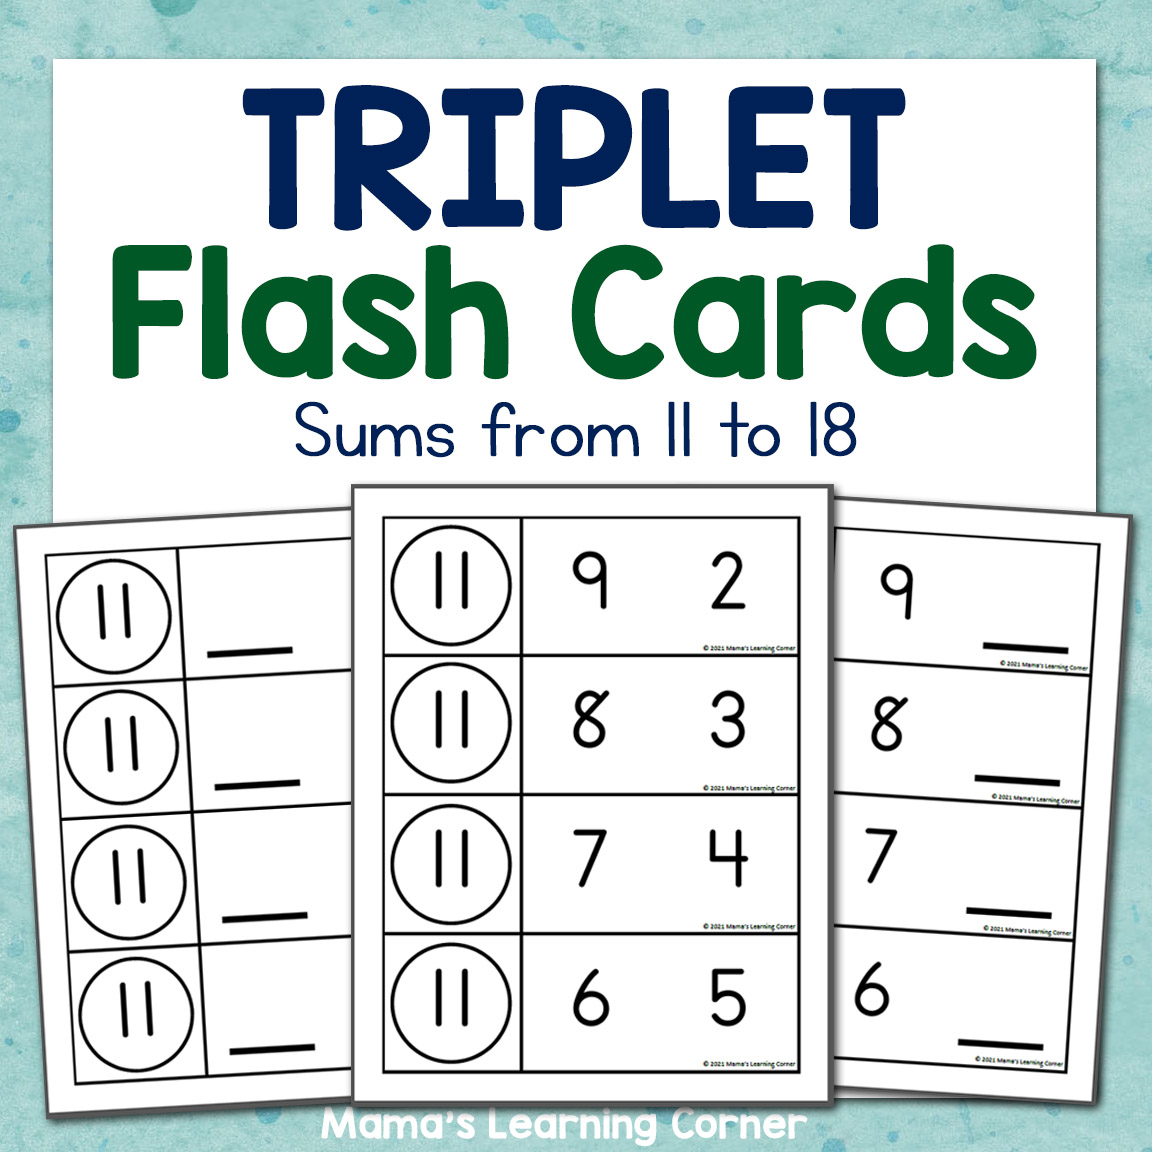 Triplet Flash Cards